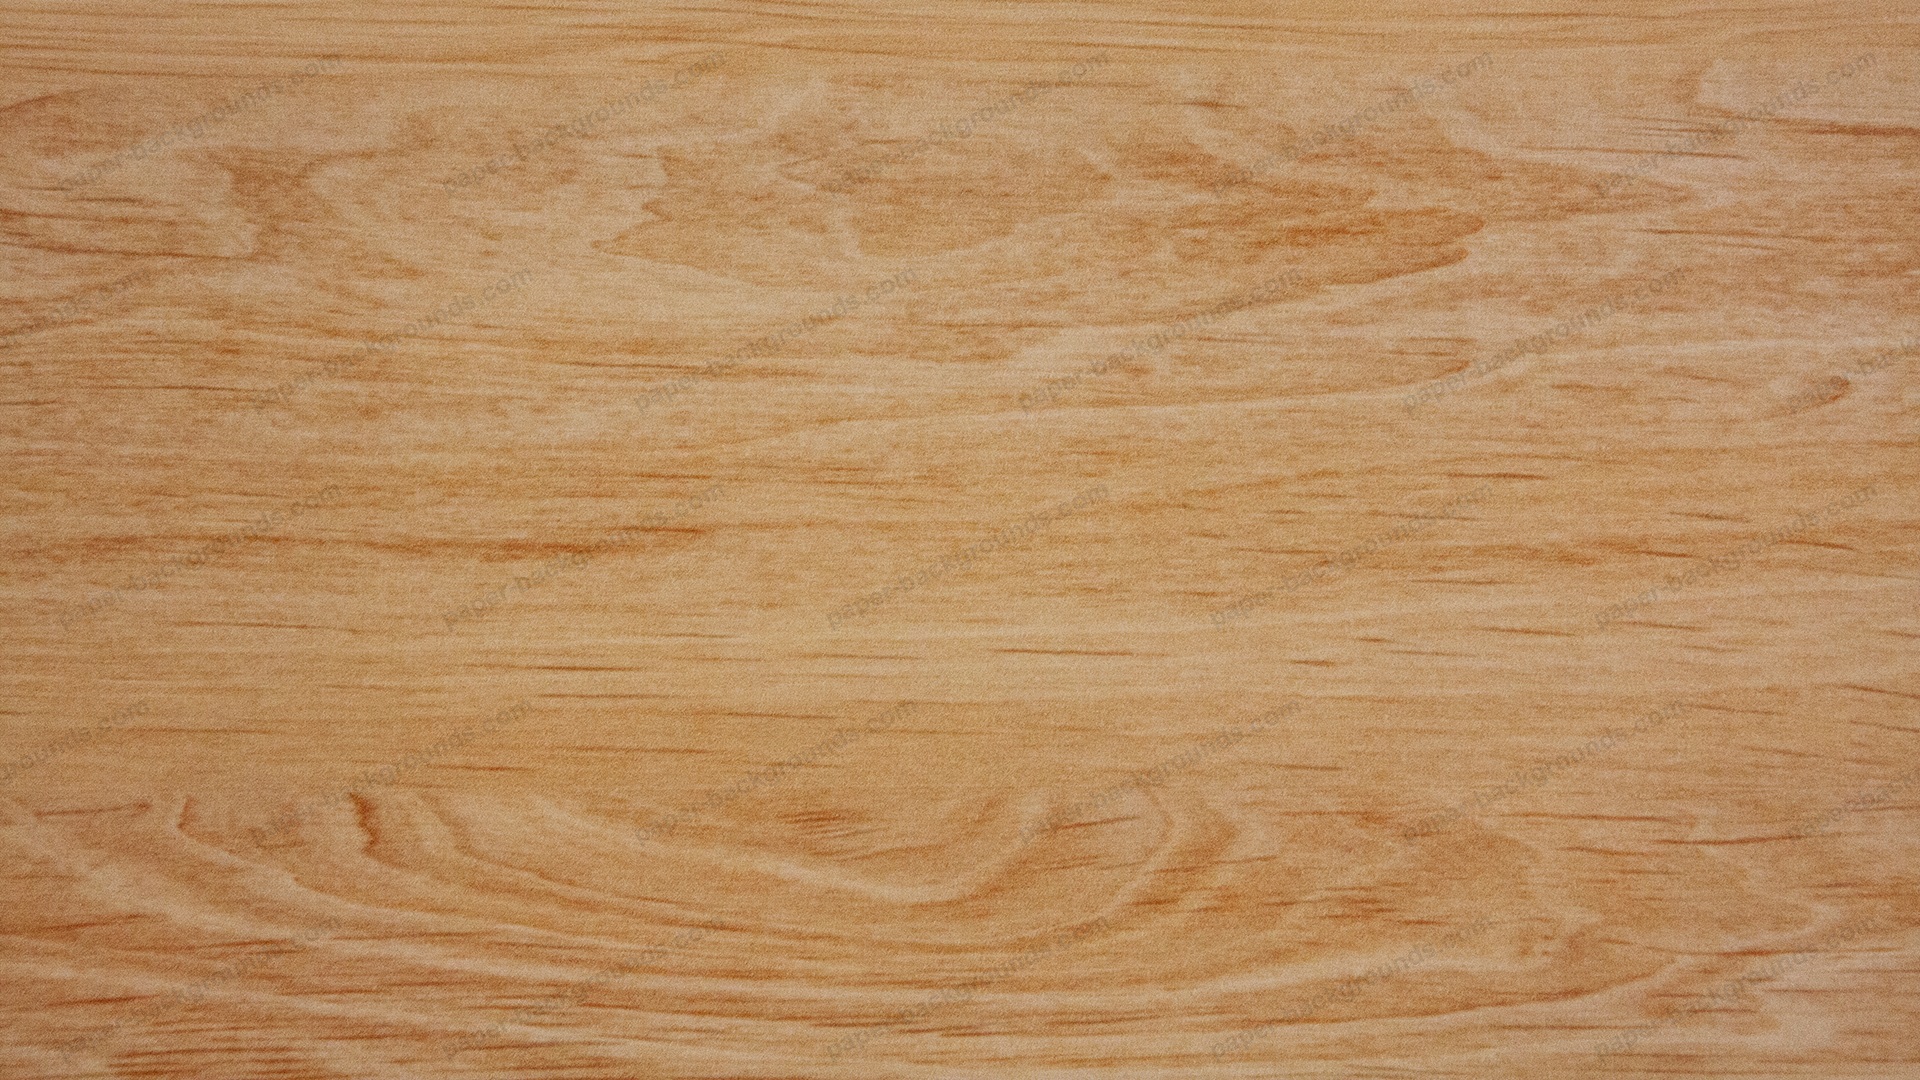 Table Wood Texture Hd - 1920x1080 Wallpaper 